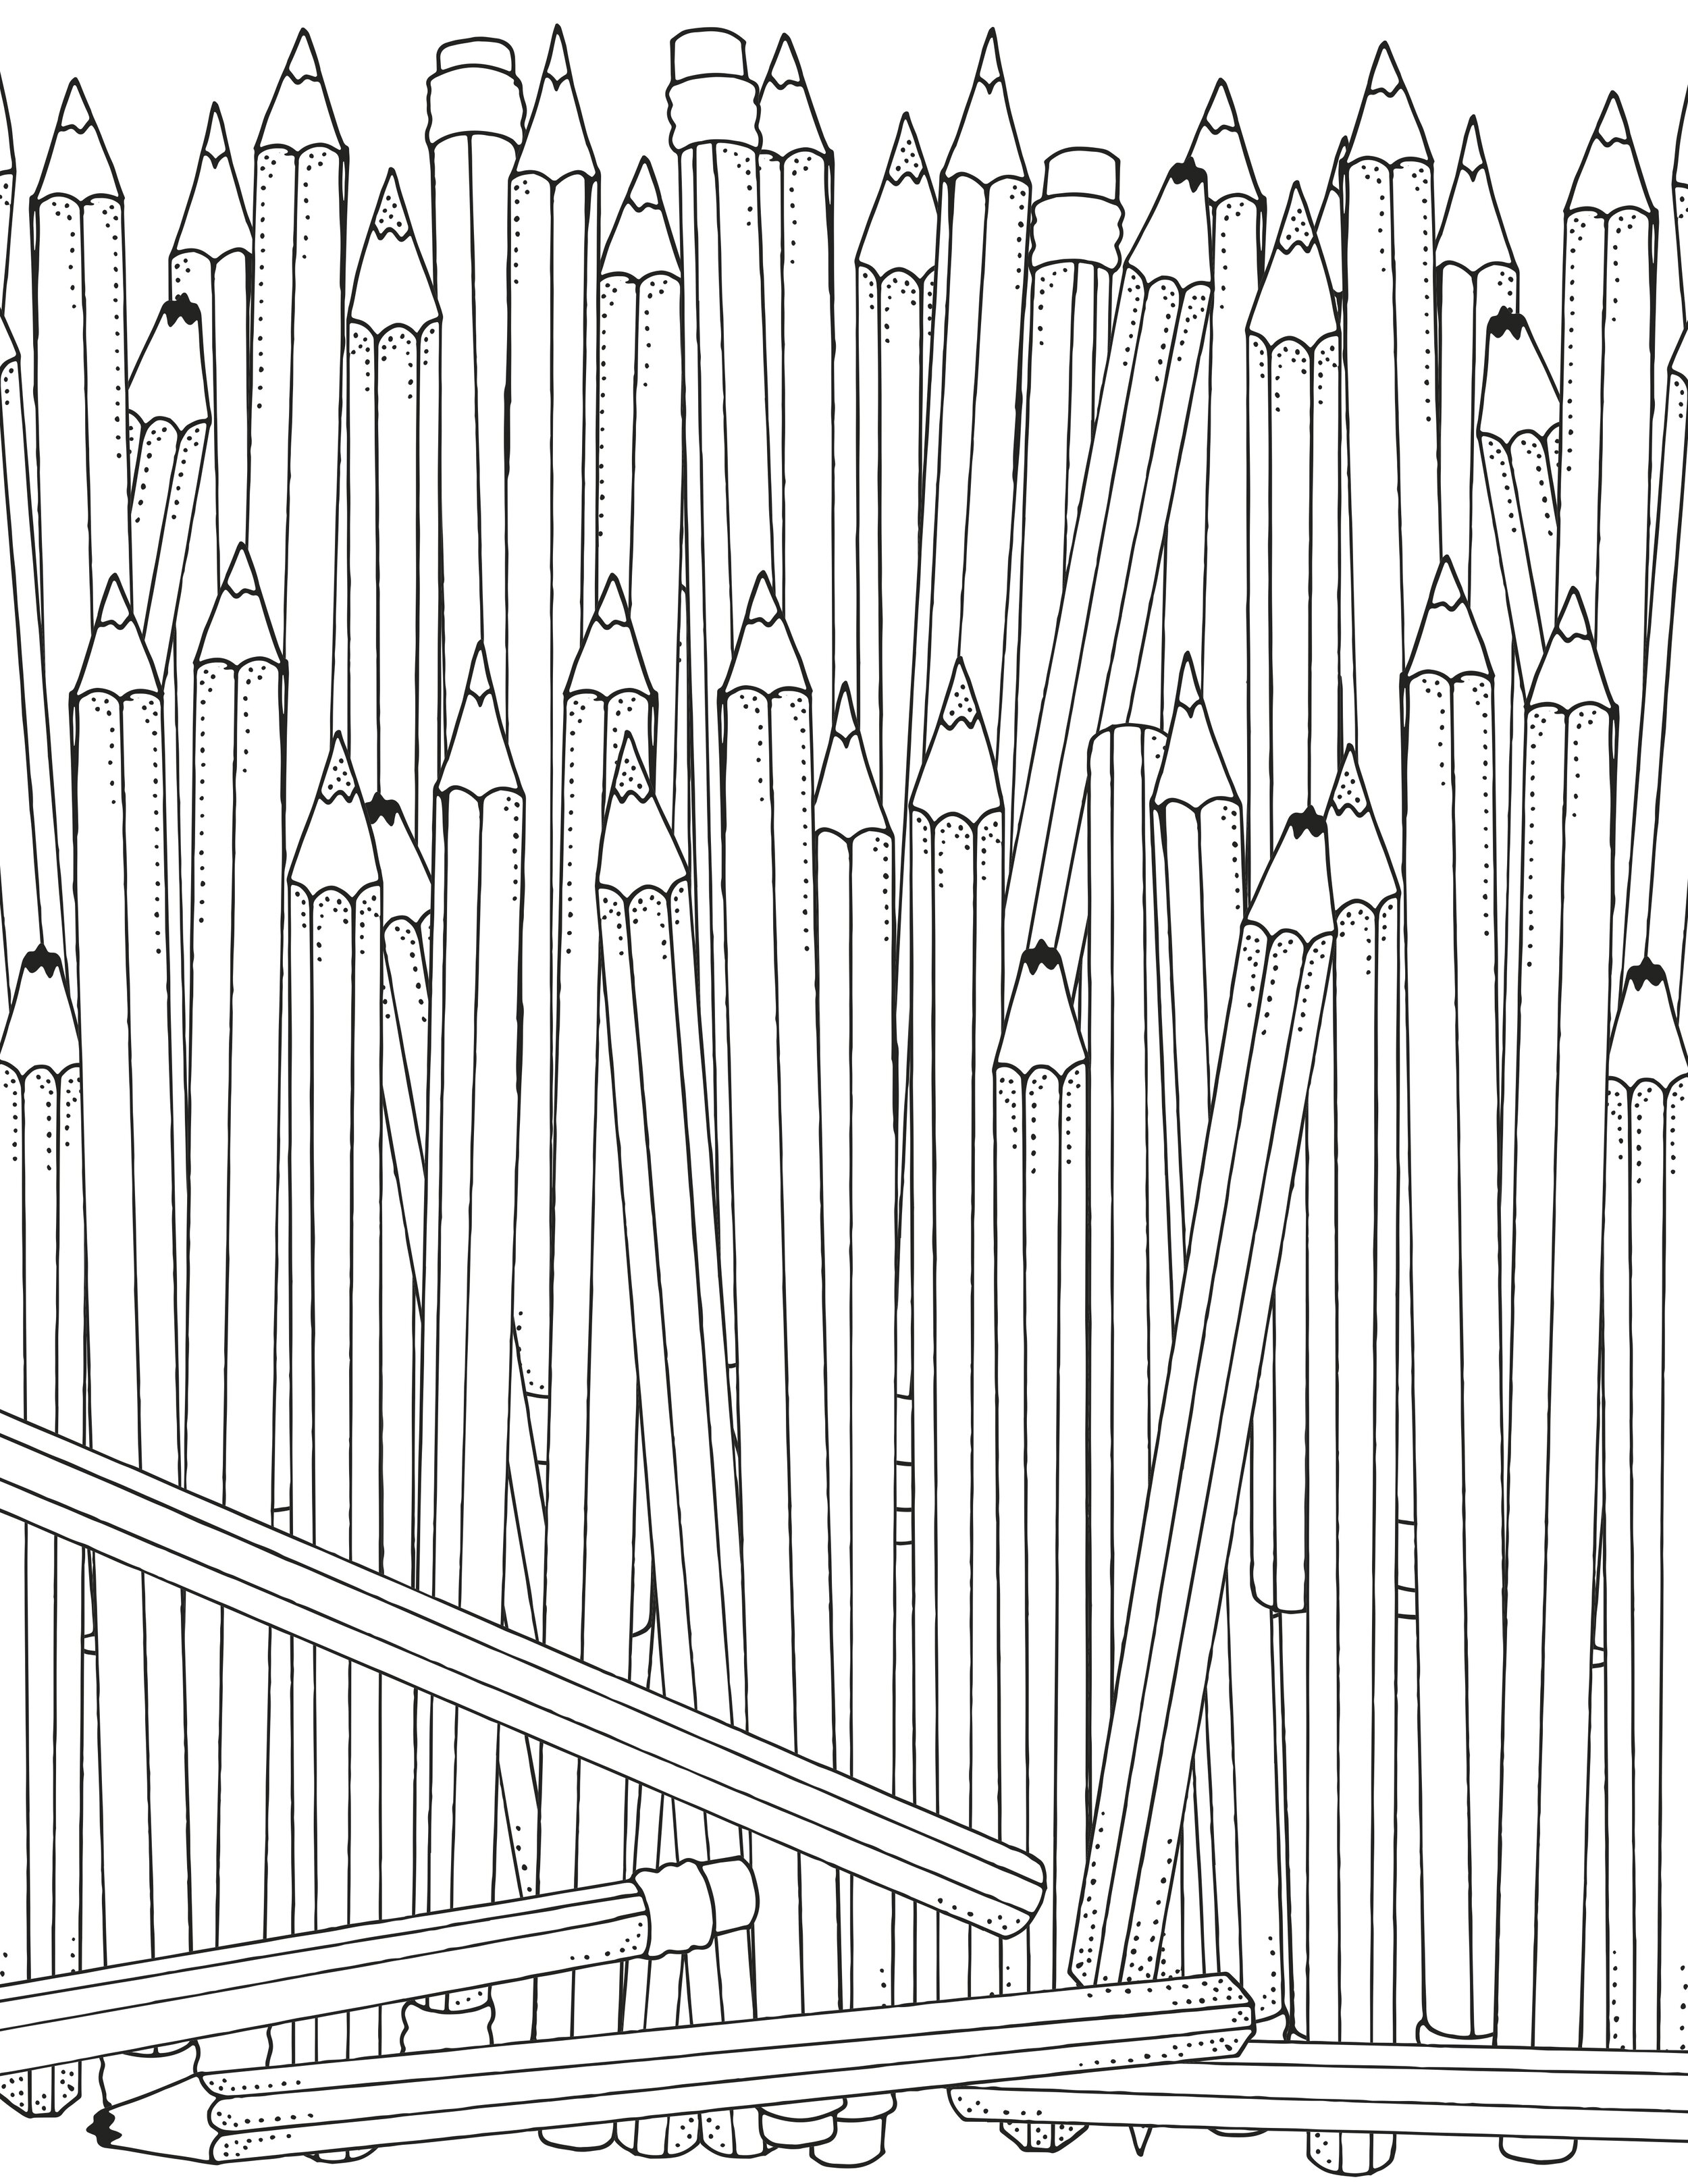 3242-Pencils.jpg